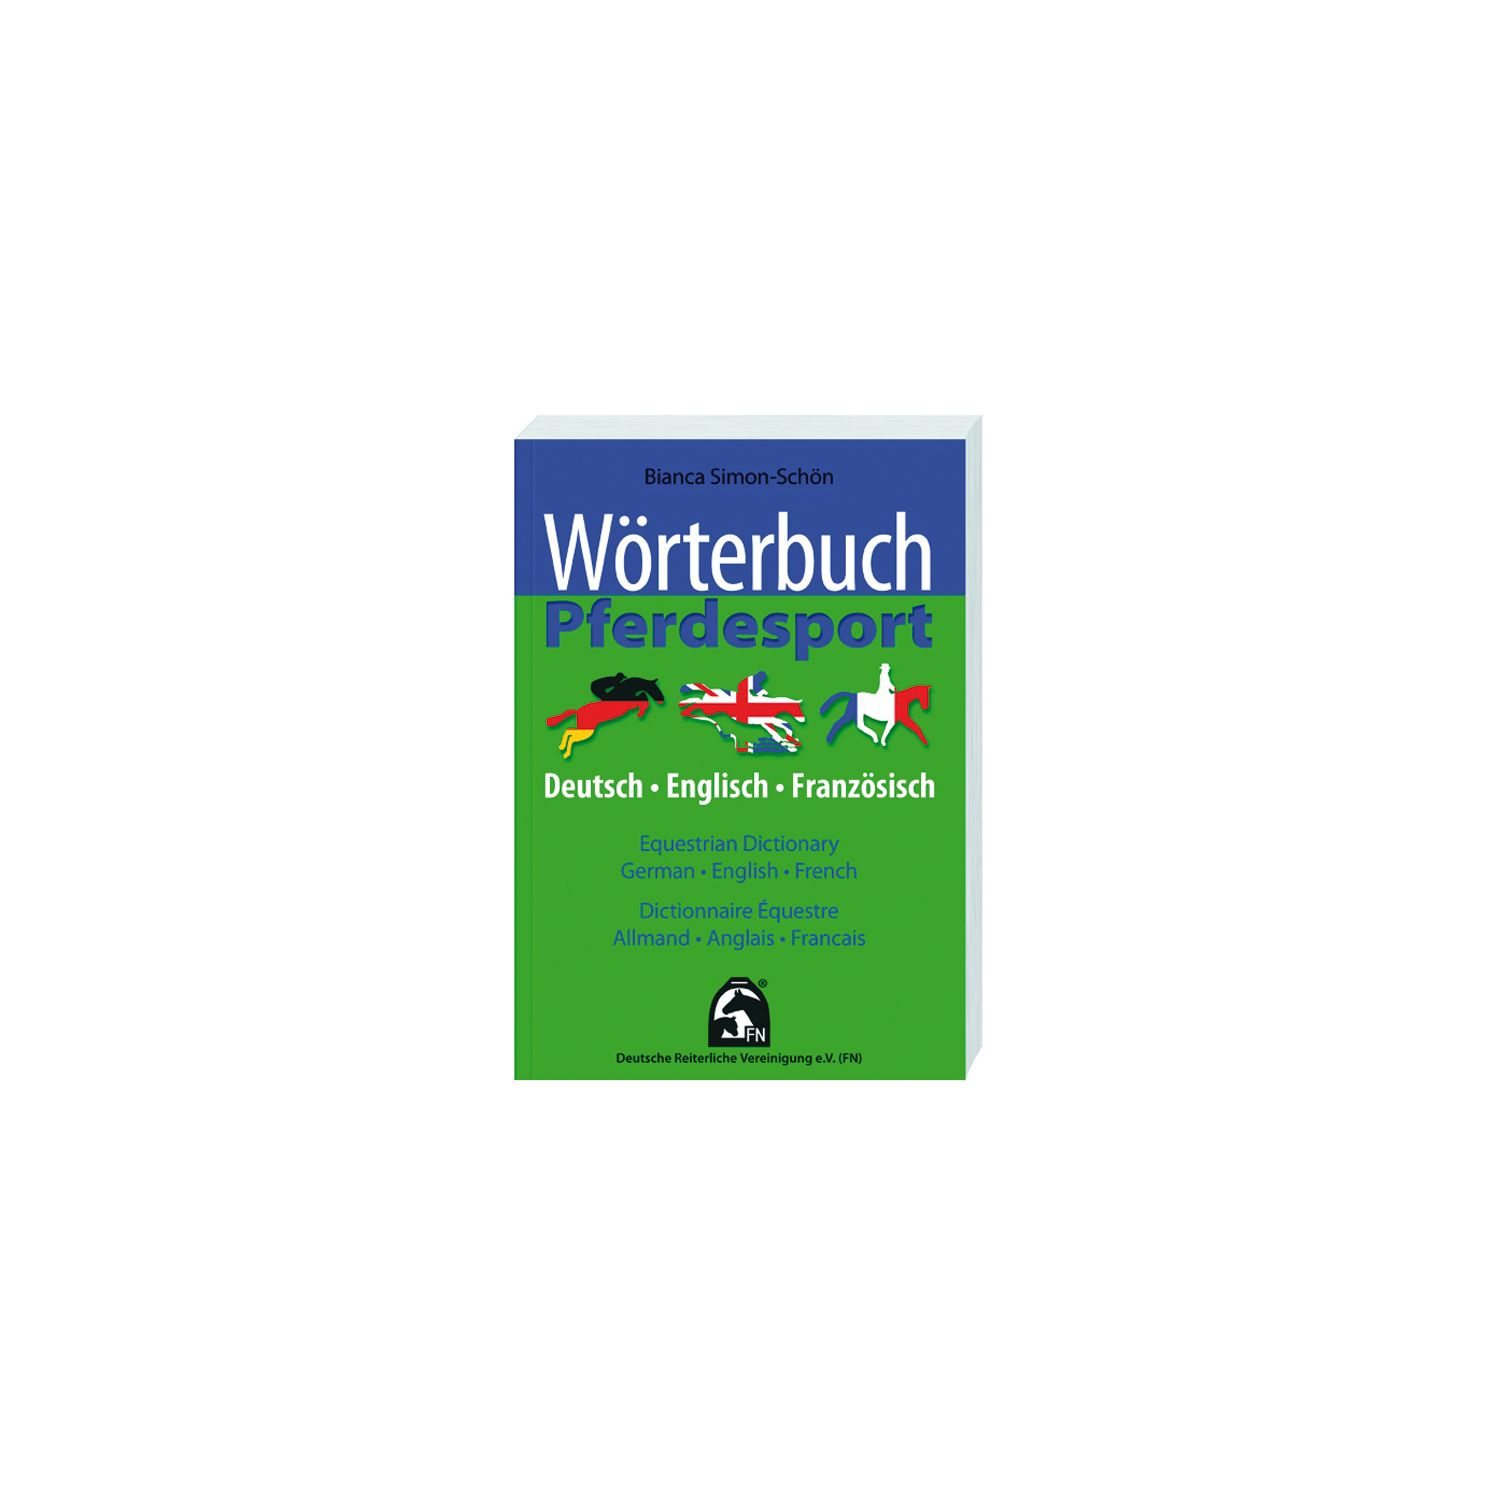 Wörterbuch Pferdesport, FNverlag 